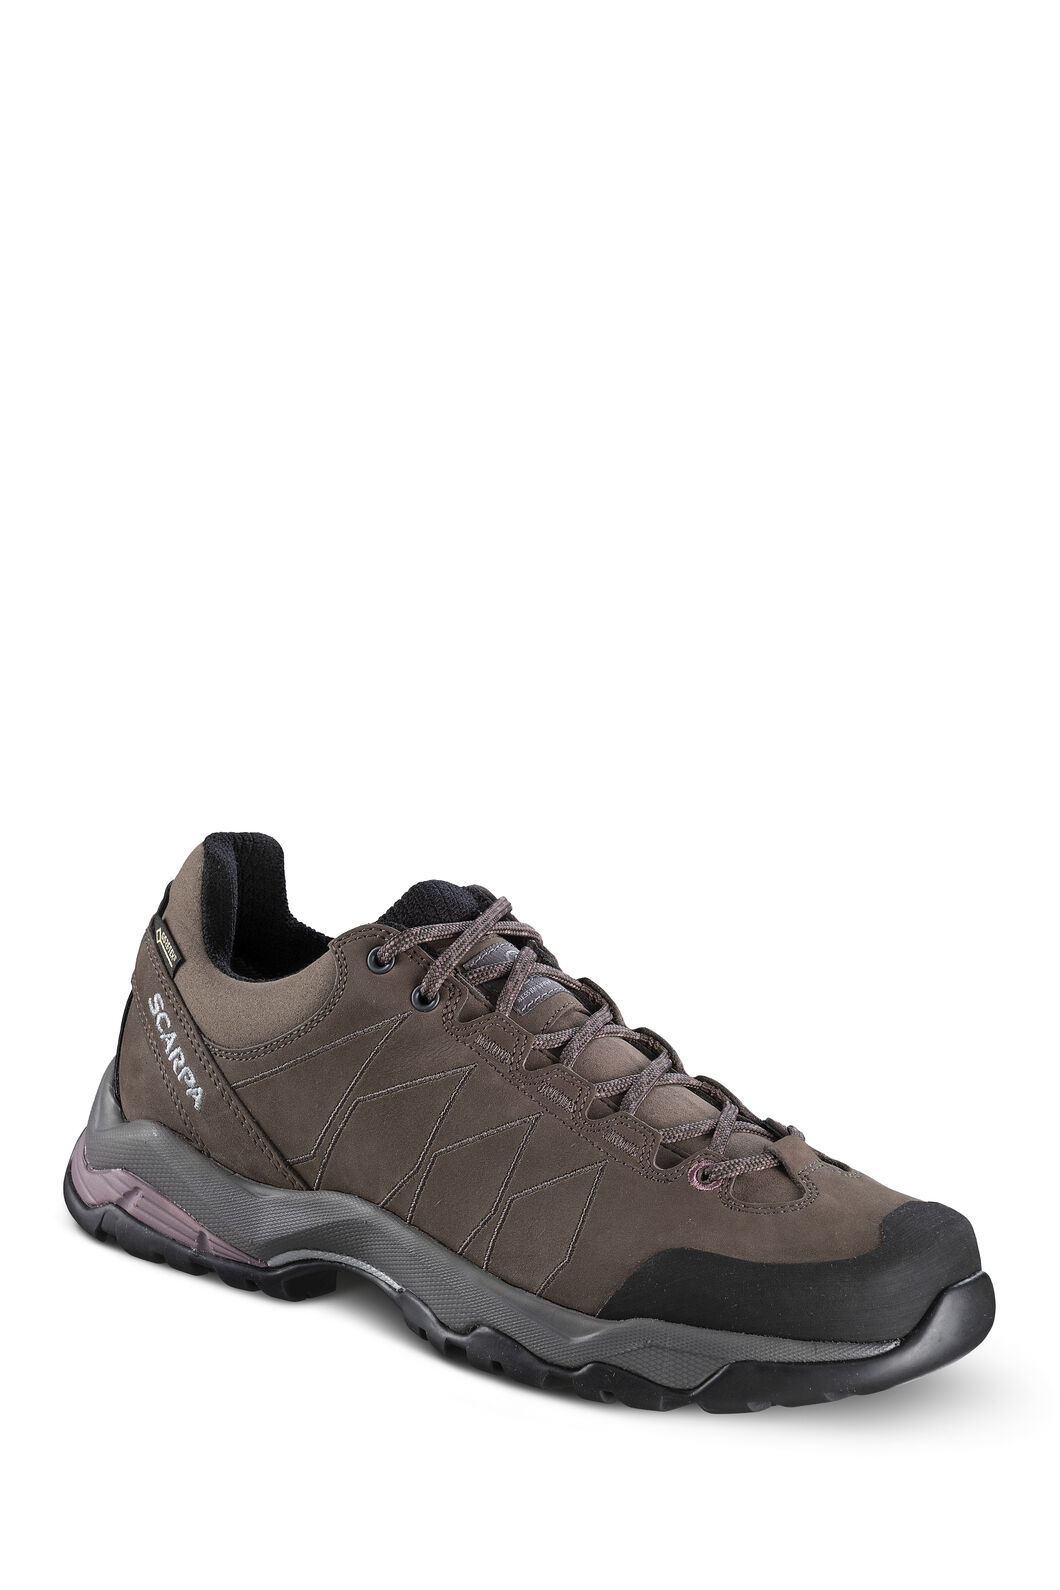 Scarpa Women's Moraine Plus GTX Hiking Shoes, Charcoal/Dark Plum, hi-res